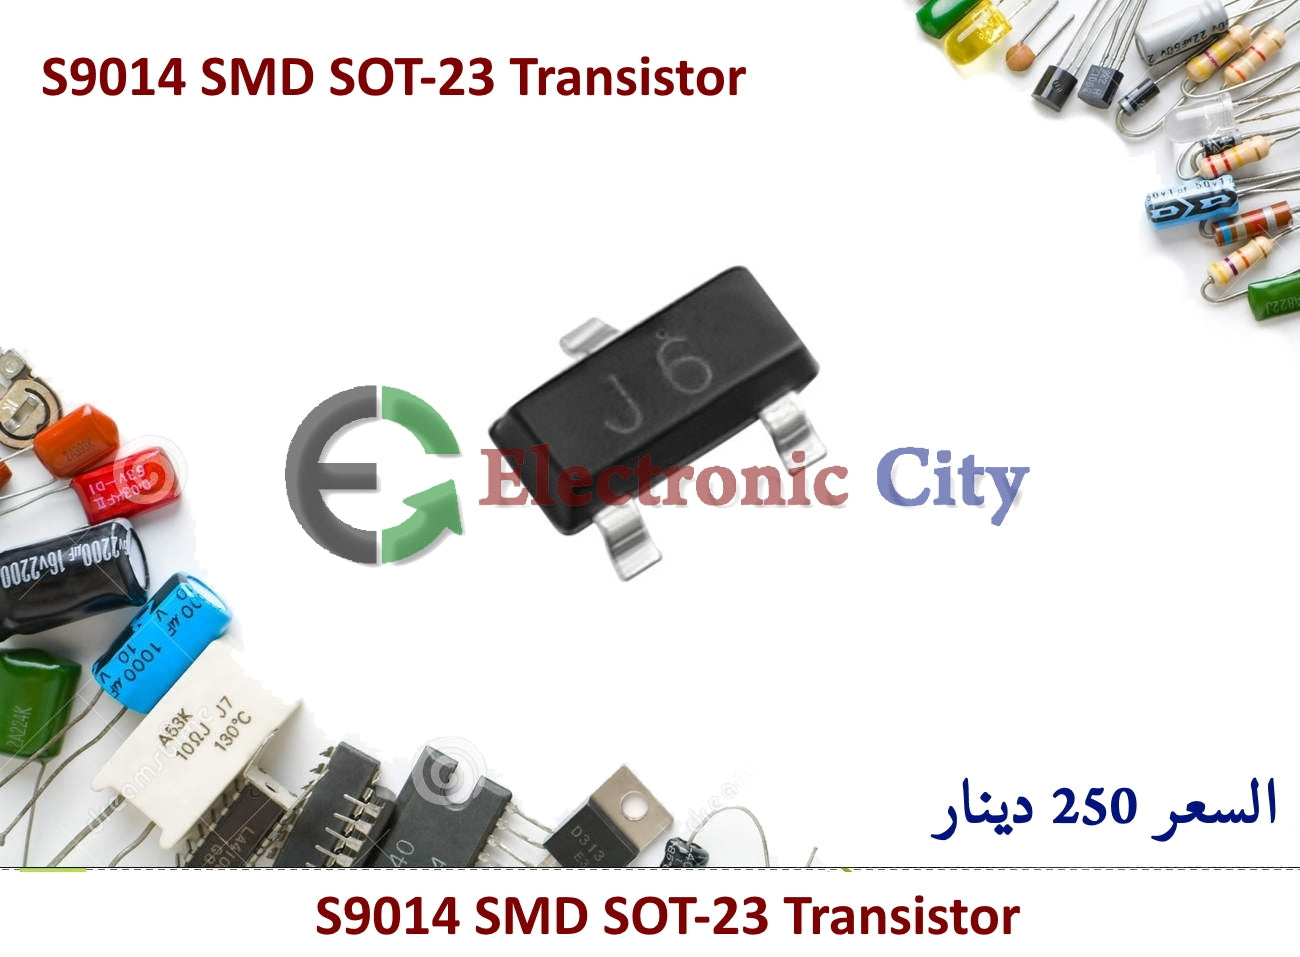 S9014 SMD SOT-23 Transistor